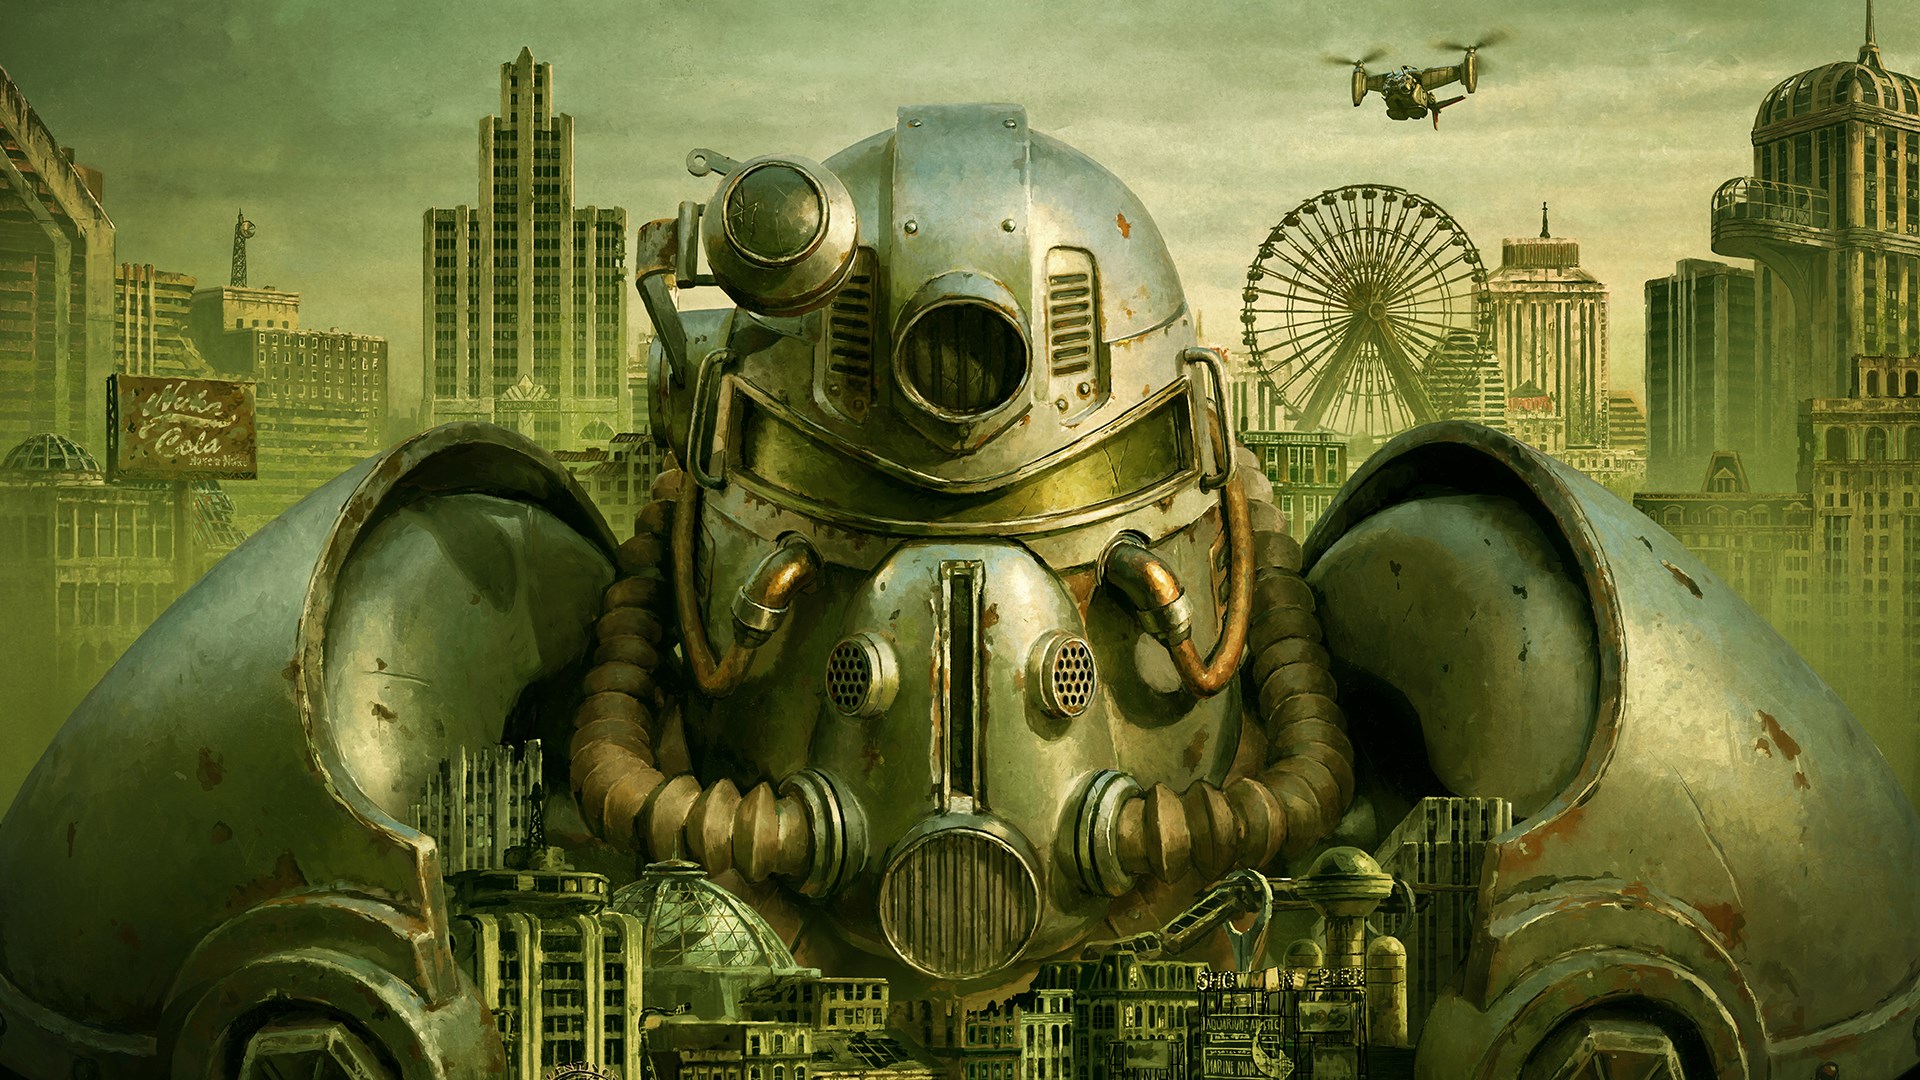 Buy State of Decay 2: Juggernaut Edition - Microsoft Store en-SA